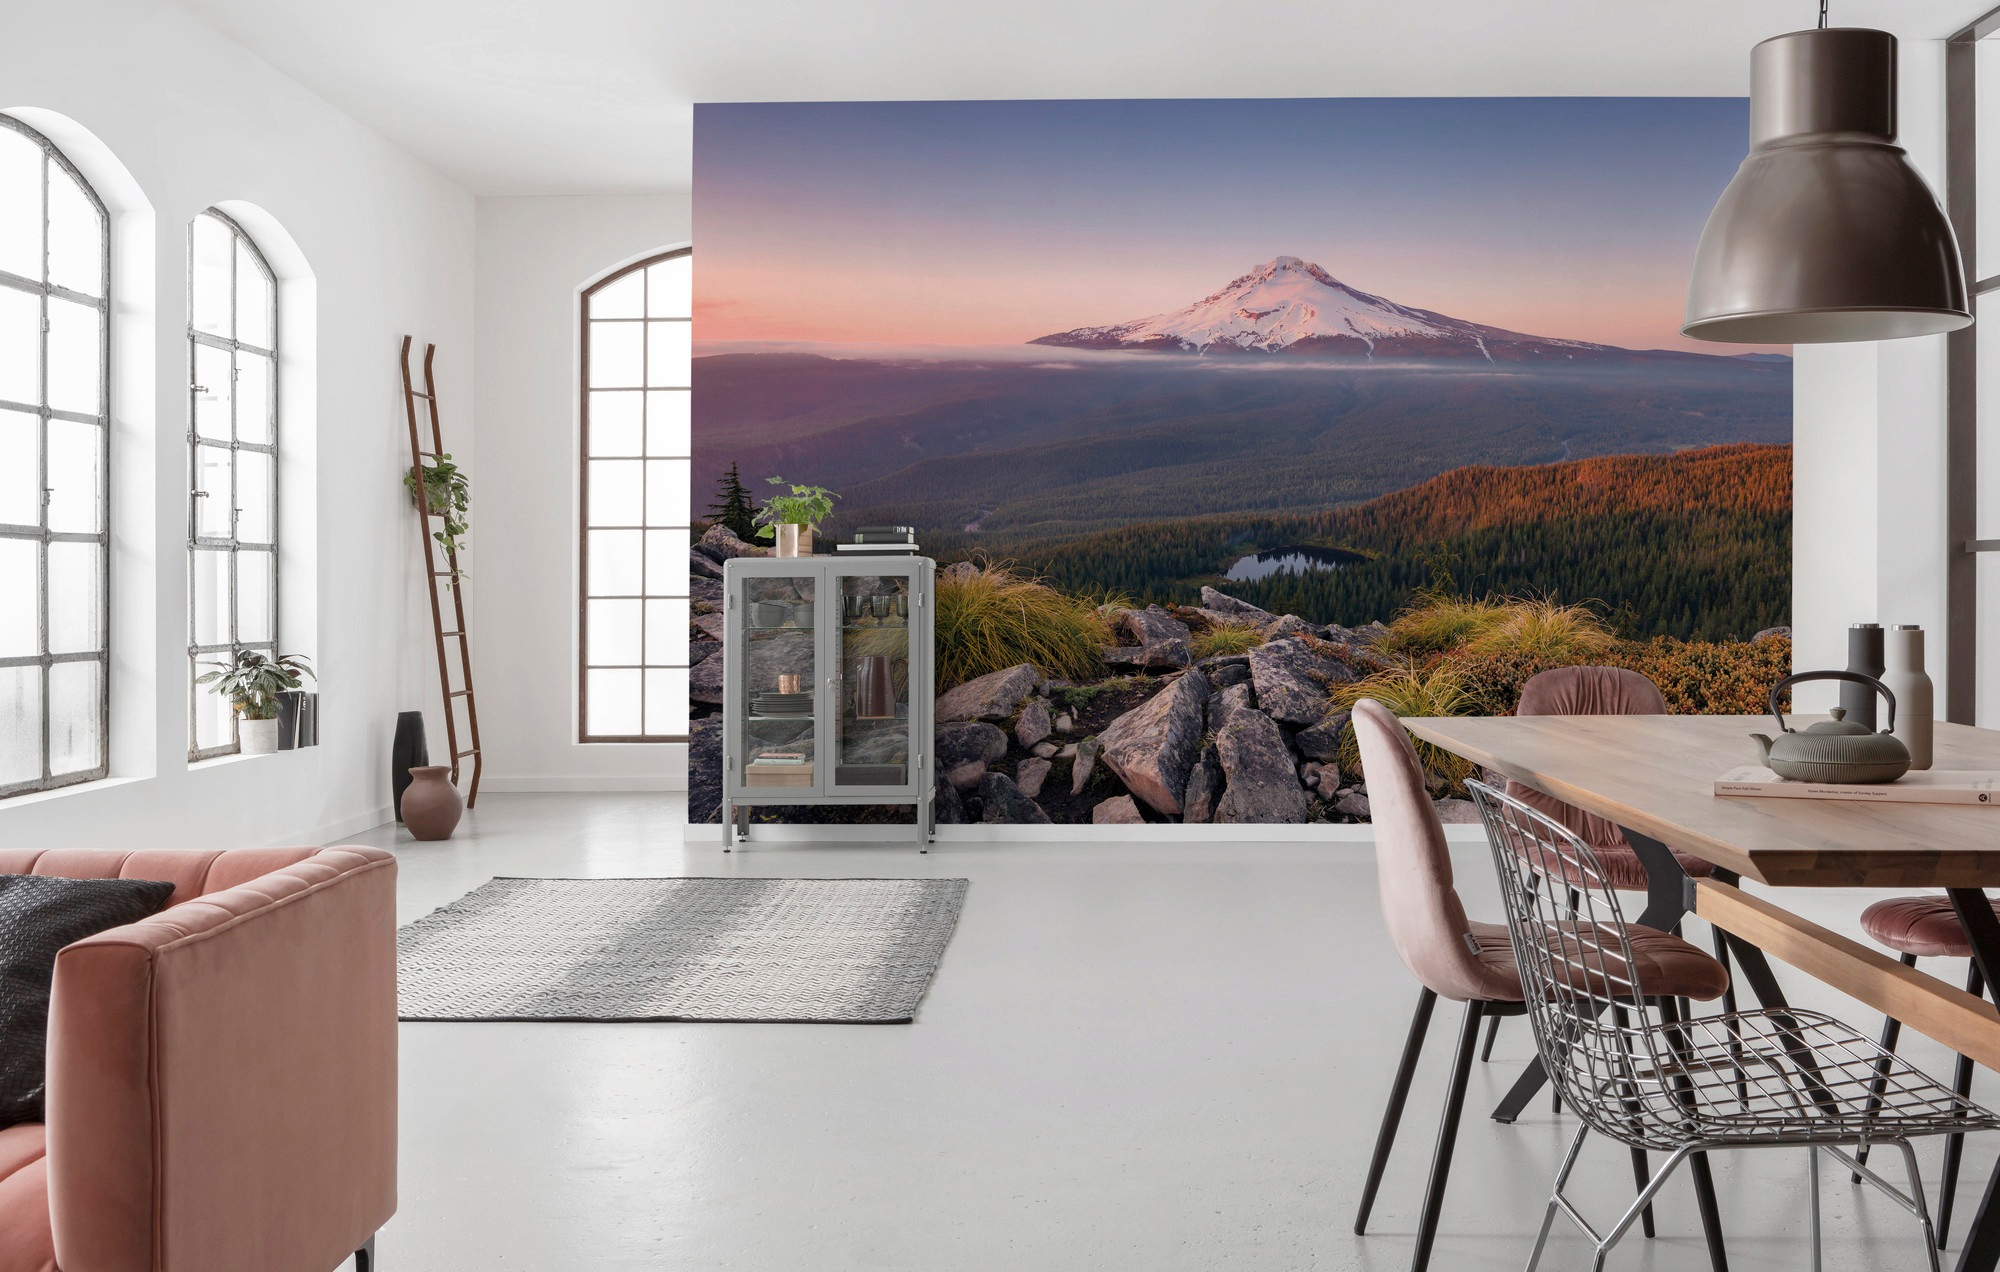 KOMAR Vlies Fototapete - Kingdom of a Mountain - Größe 450 x 280 cm mehrfar günstig online kaufen